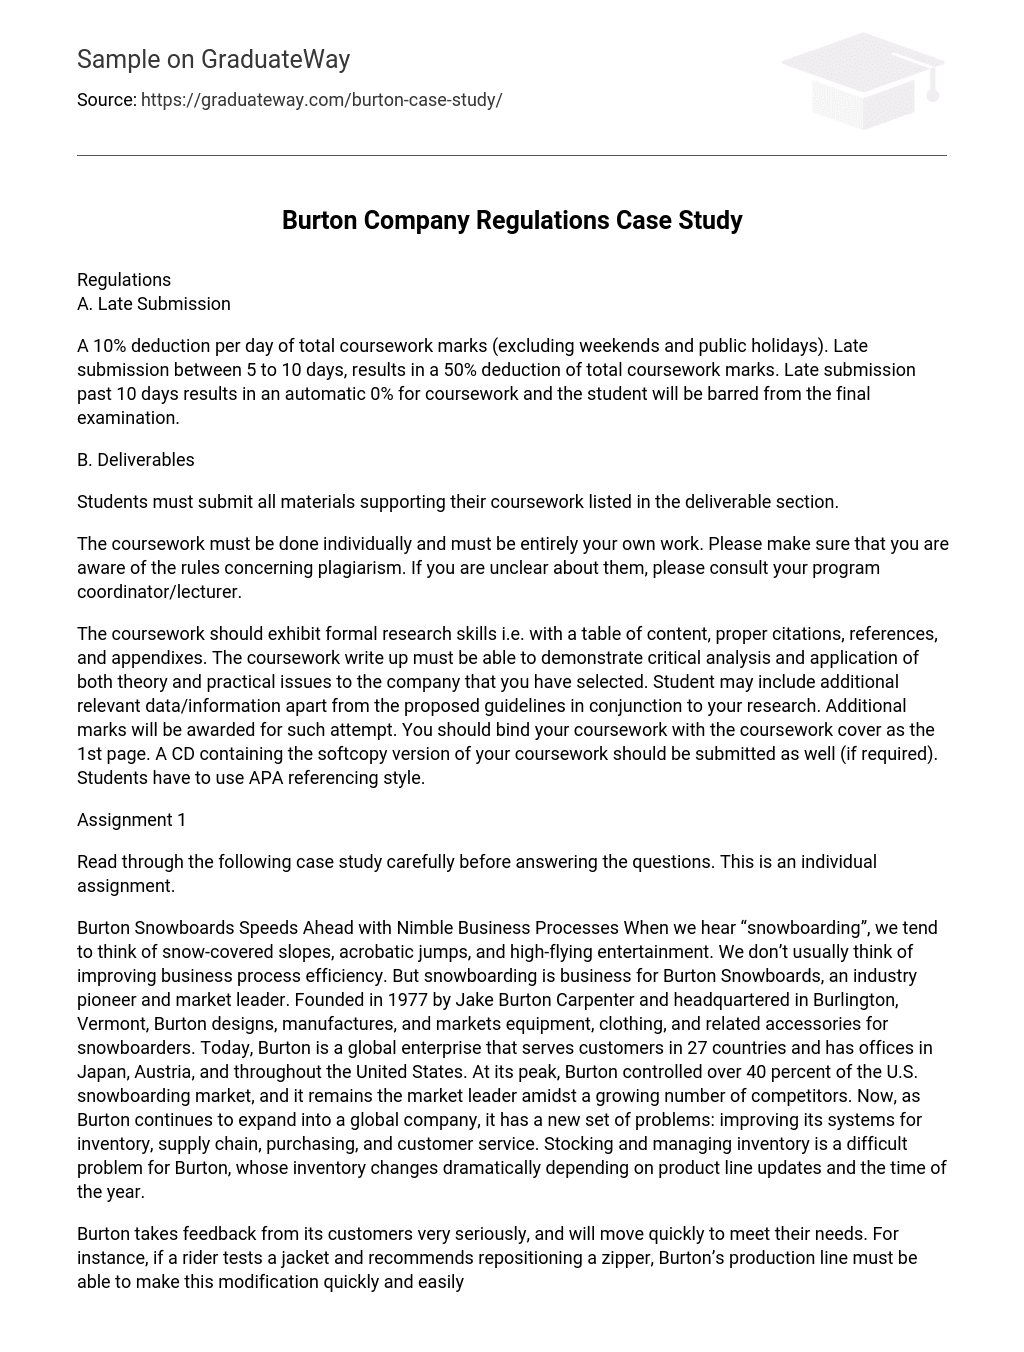 Burton Company Regulations Case Study